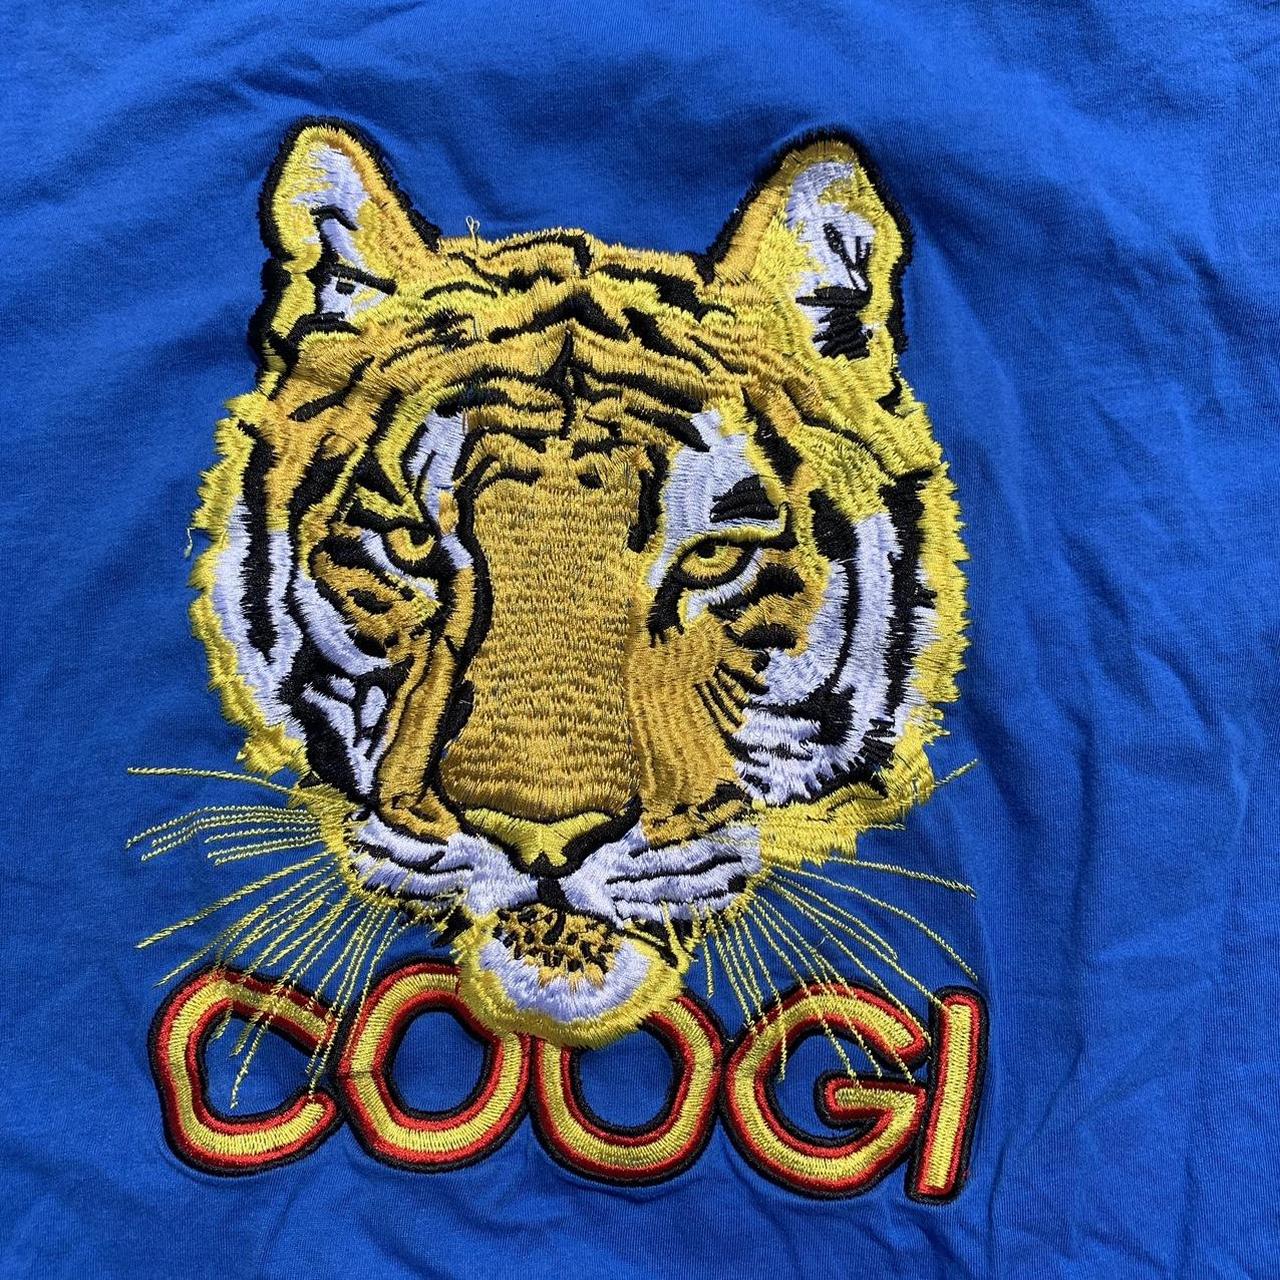 Coogi Men's Blue and Orange T-shirt | Depop